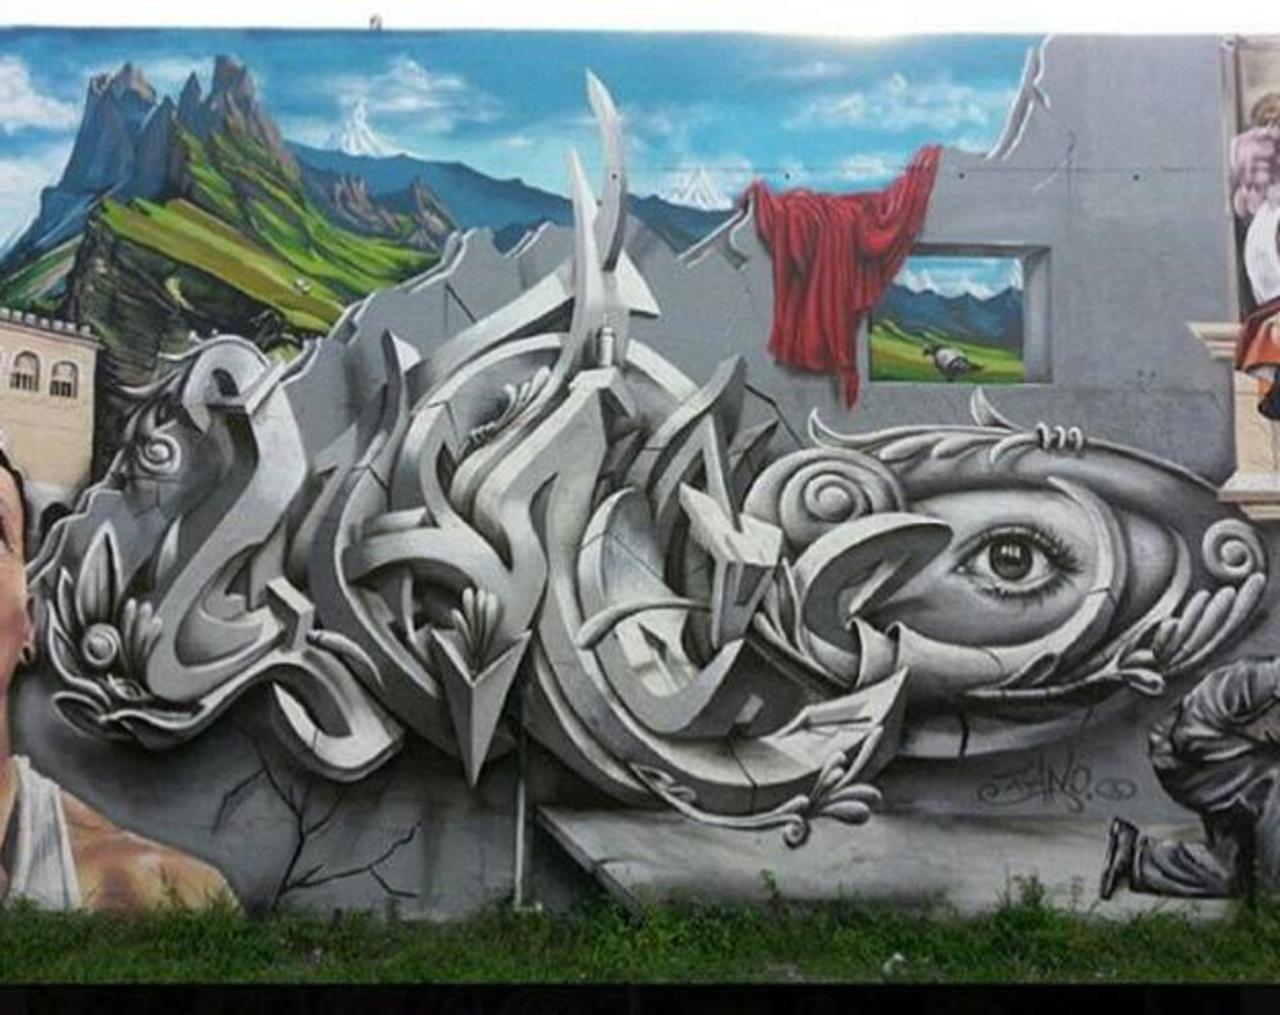 Street Art by Smog One

#art #mural #graffiti #streetart http://t.co/b1TnVpAQde